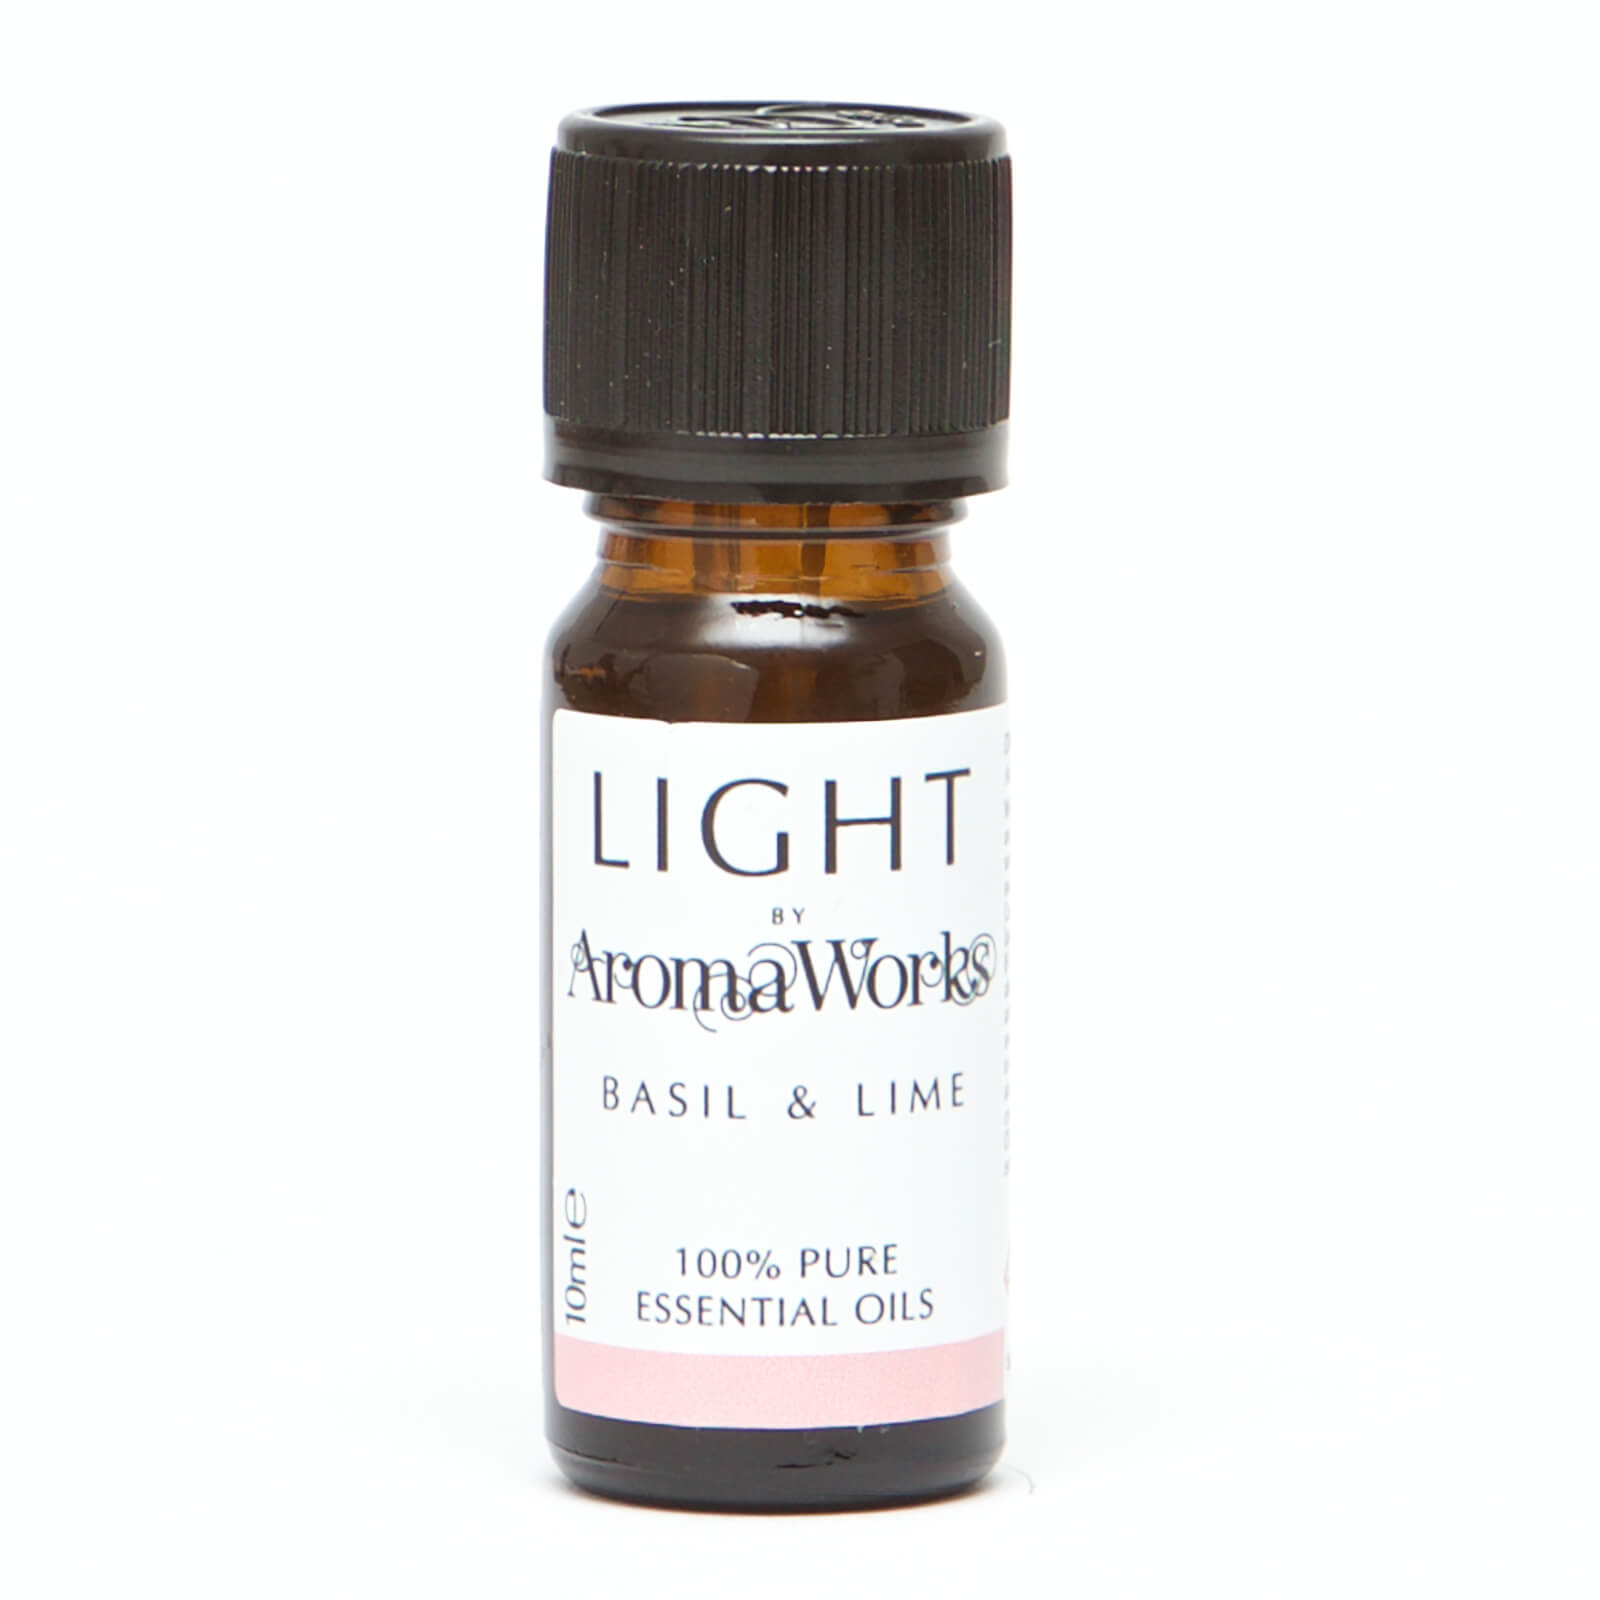 AromaWorks Light Range - Basil and Lime Essential Oil 10ml